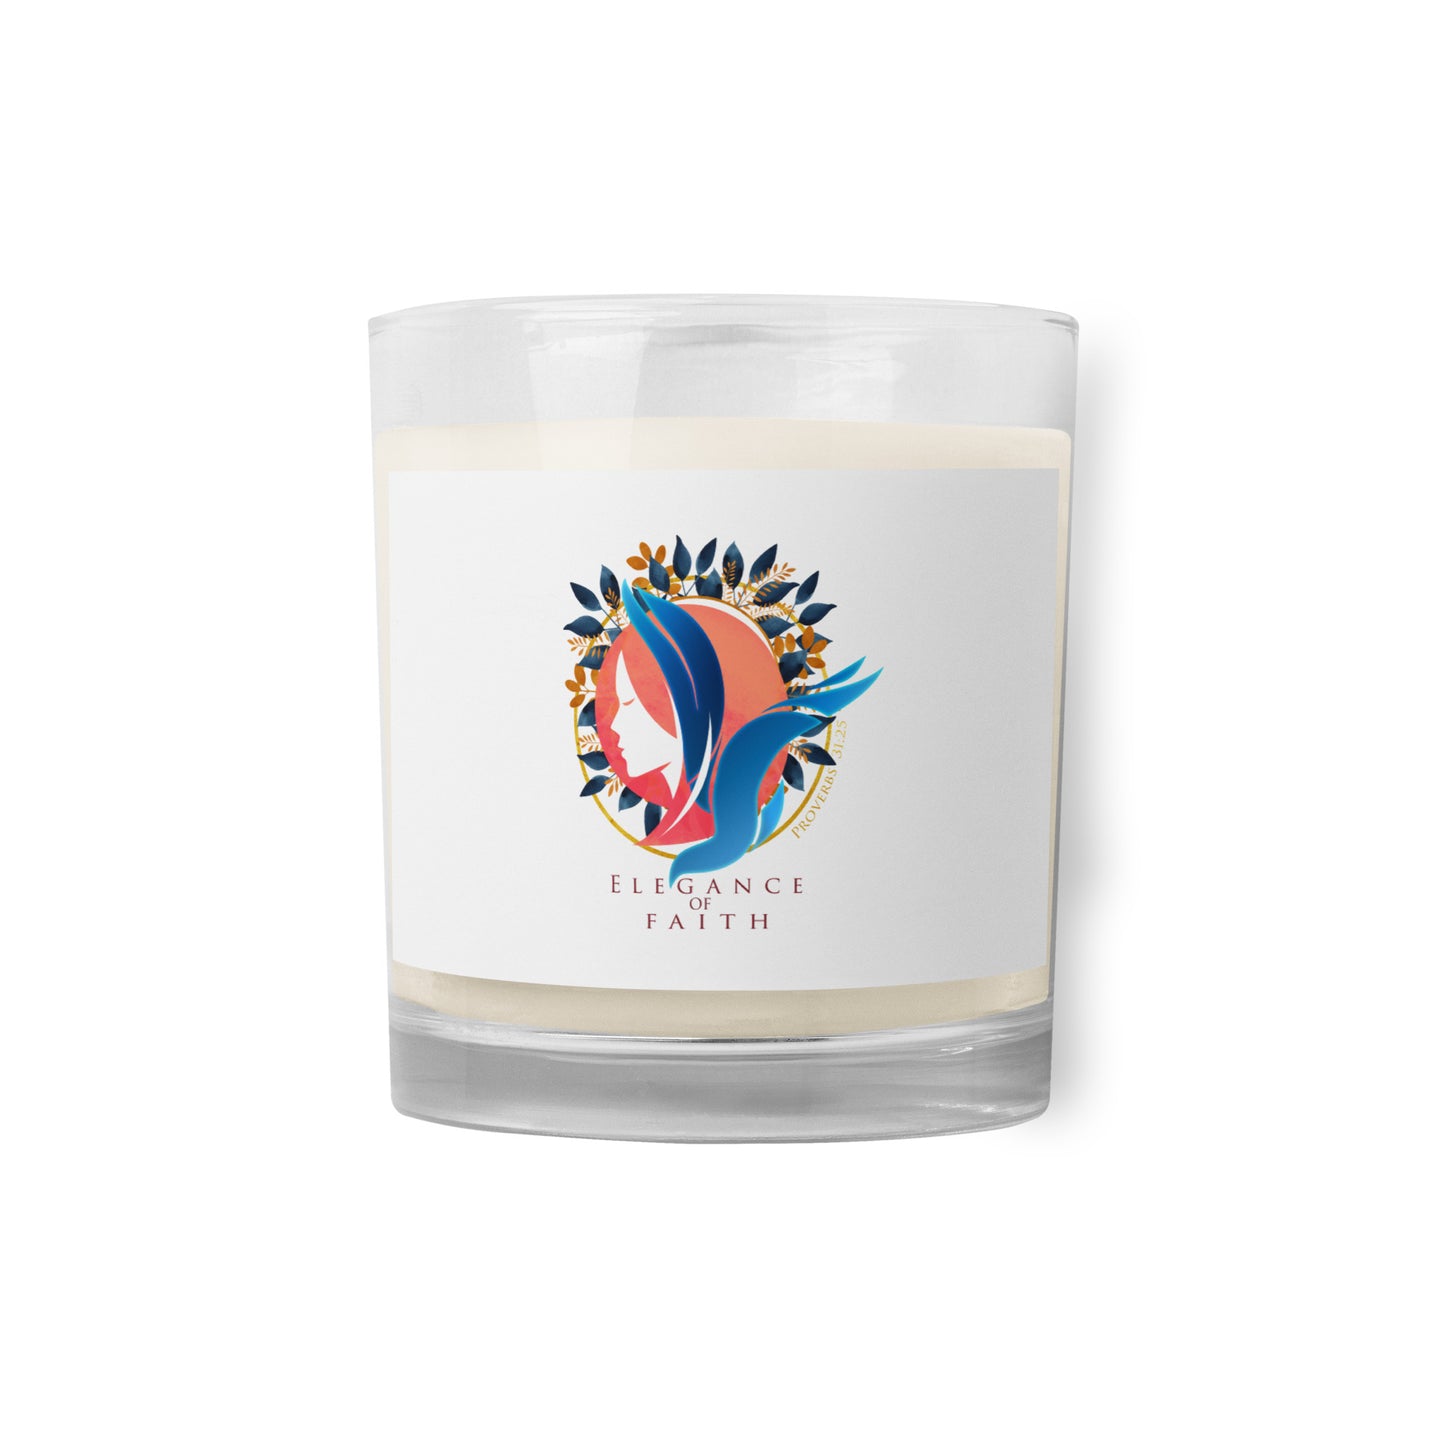 Elegance of Faith Glass jar soy wax candle